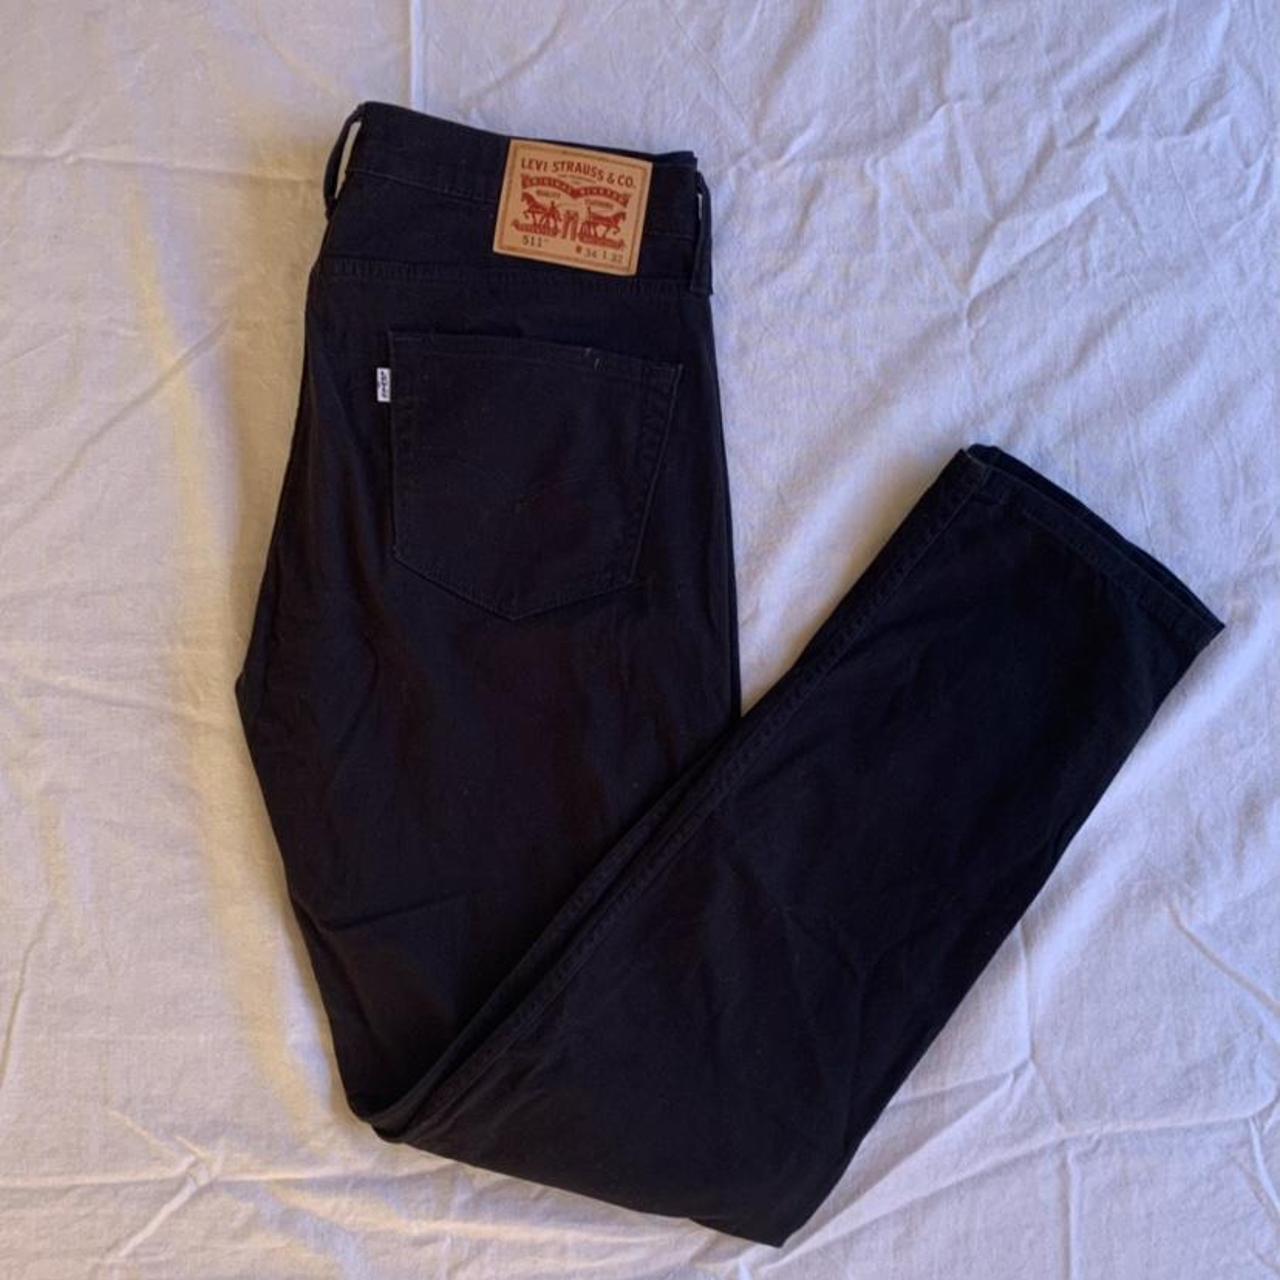 Vintage Black Levi’s 511 jeans In perfect... - Depop